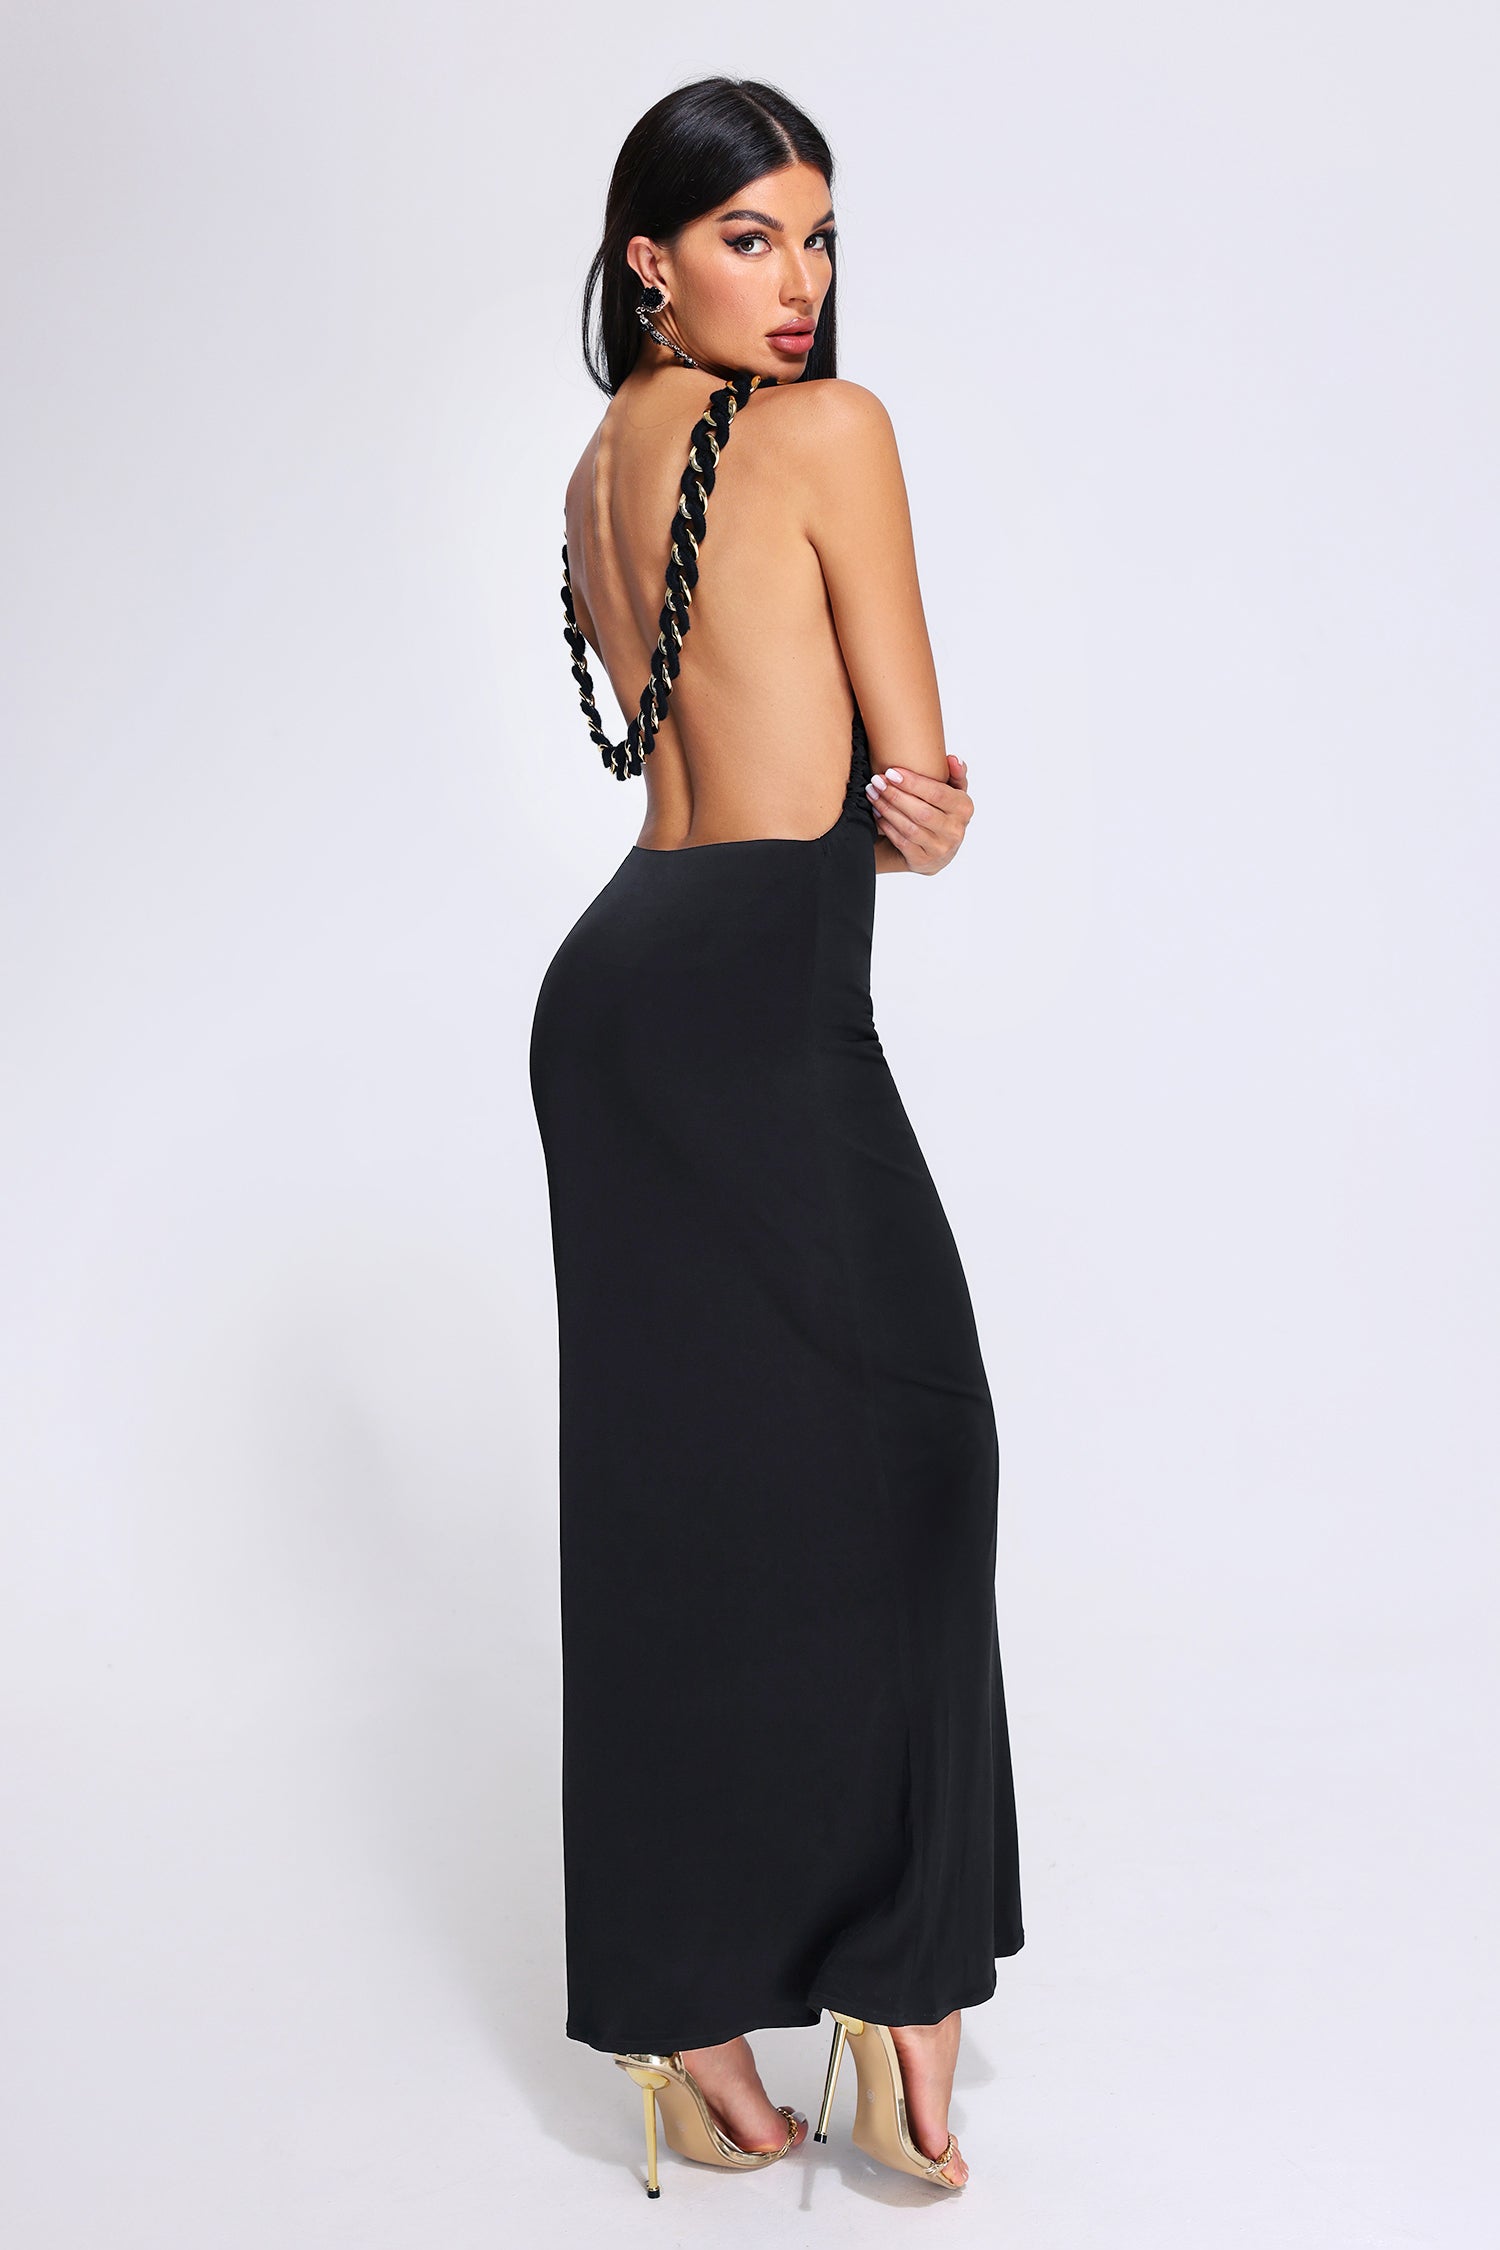 Quneisha Backless Maxi Dress